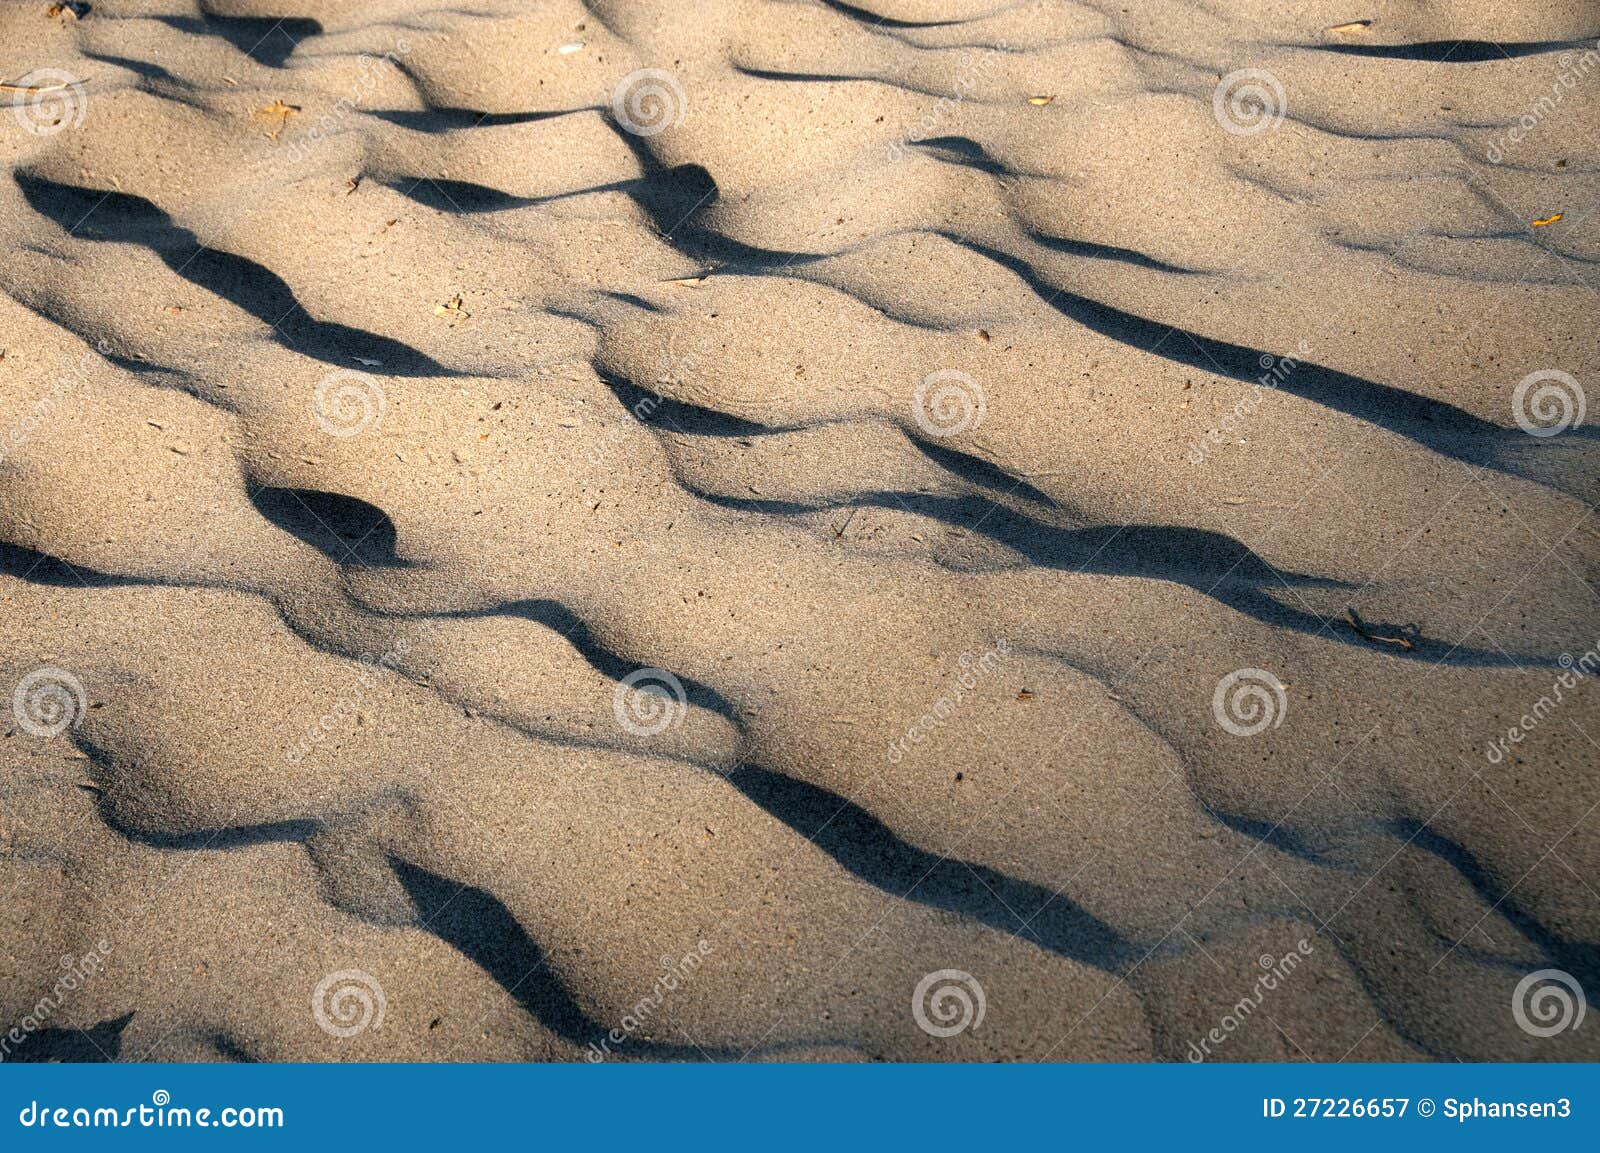 ridges of sand